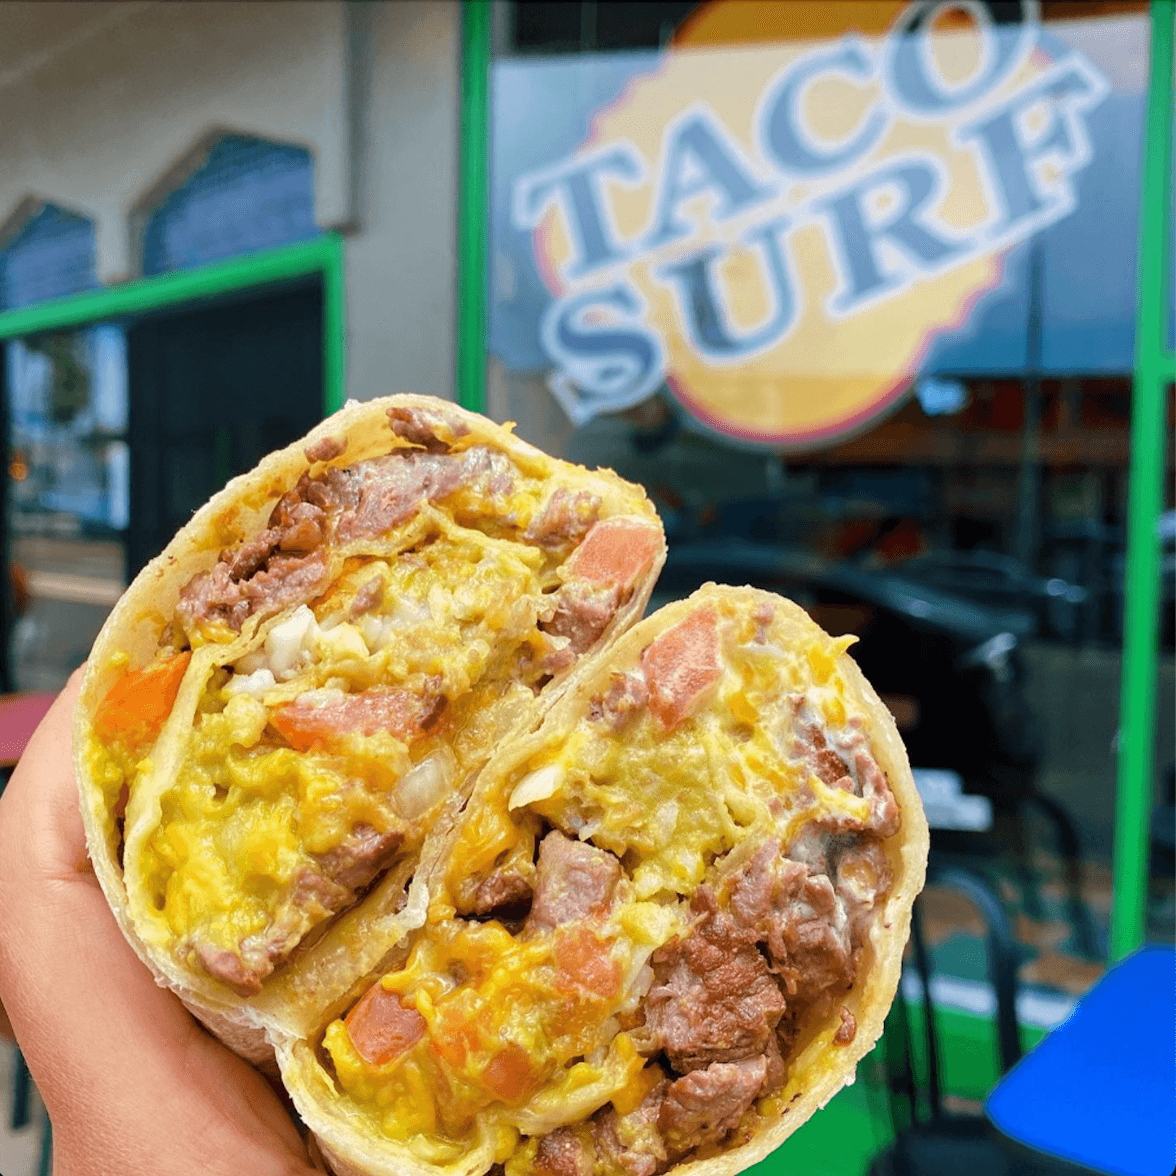 10 Great Places to Bite into a Big Burrito